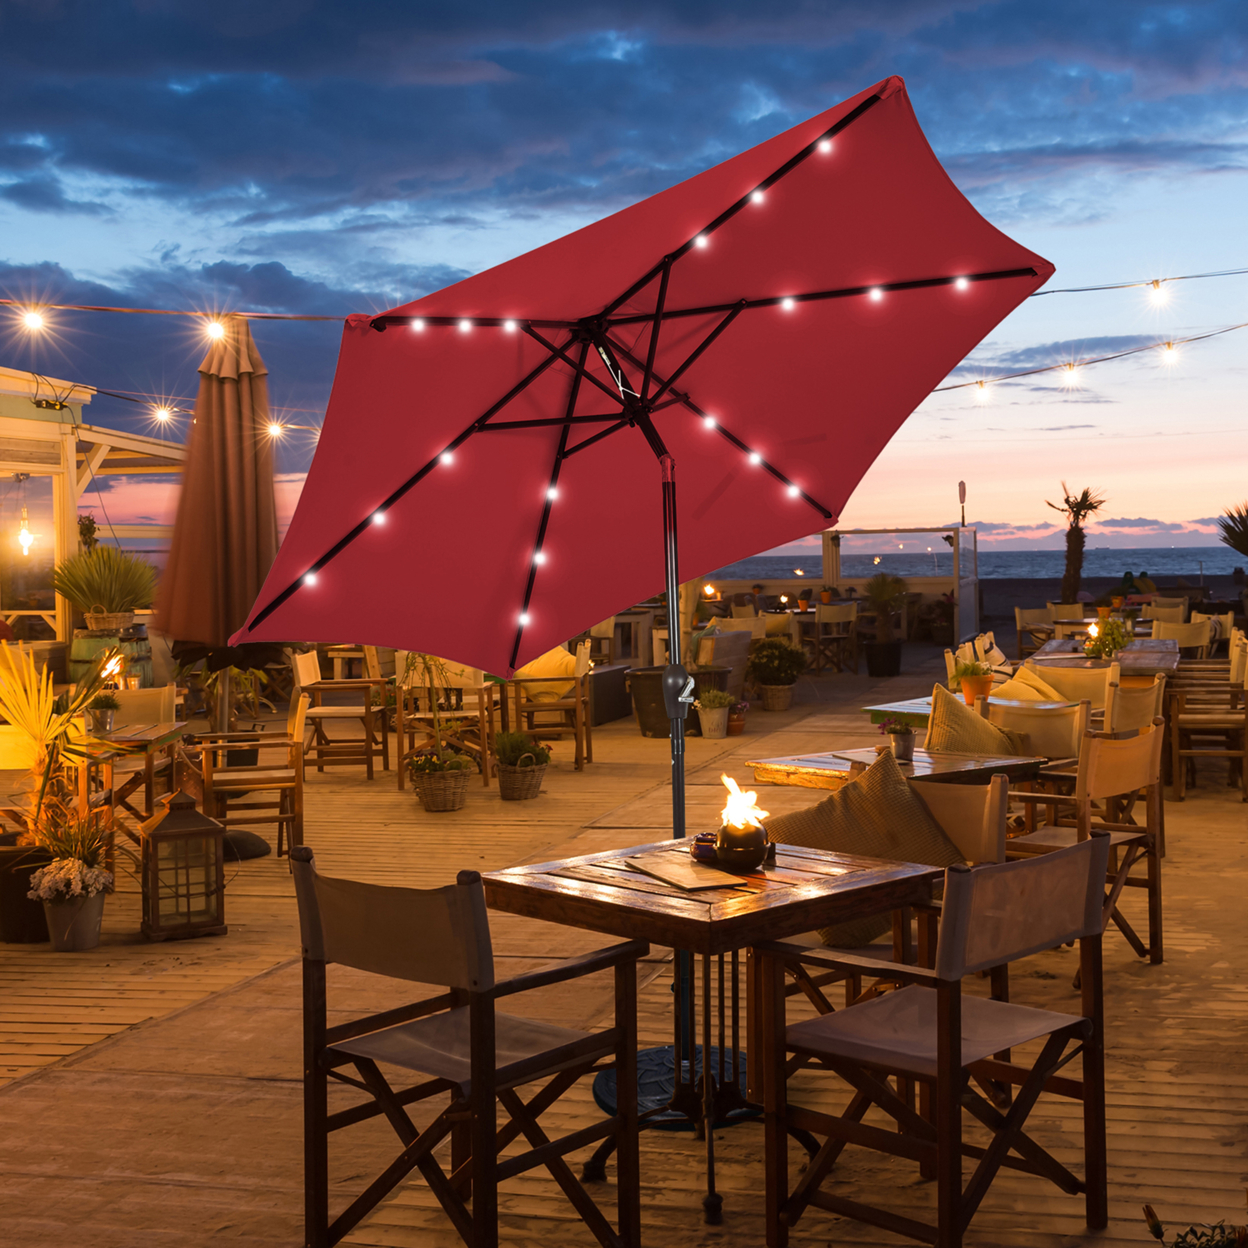 9 Ft Patio Table Market Umbrella Yard Outdoor W/ Solar LED Lights - Burgundy